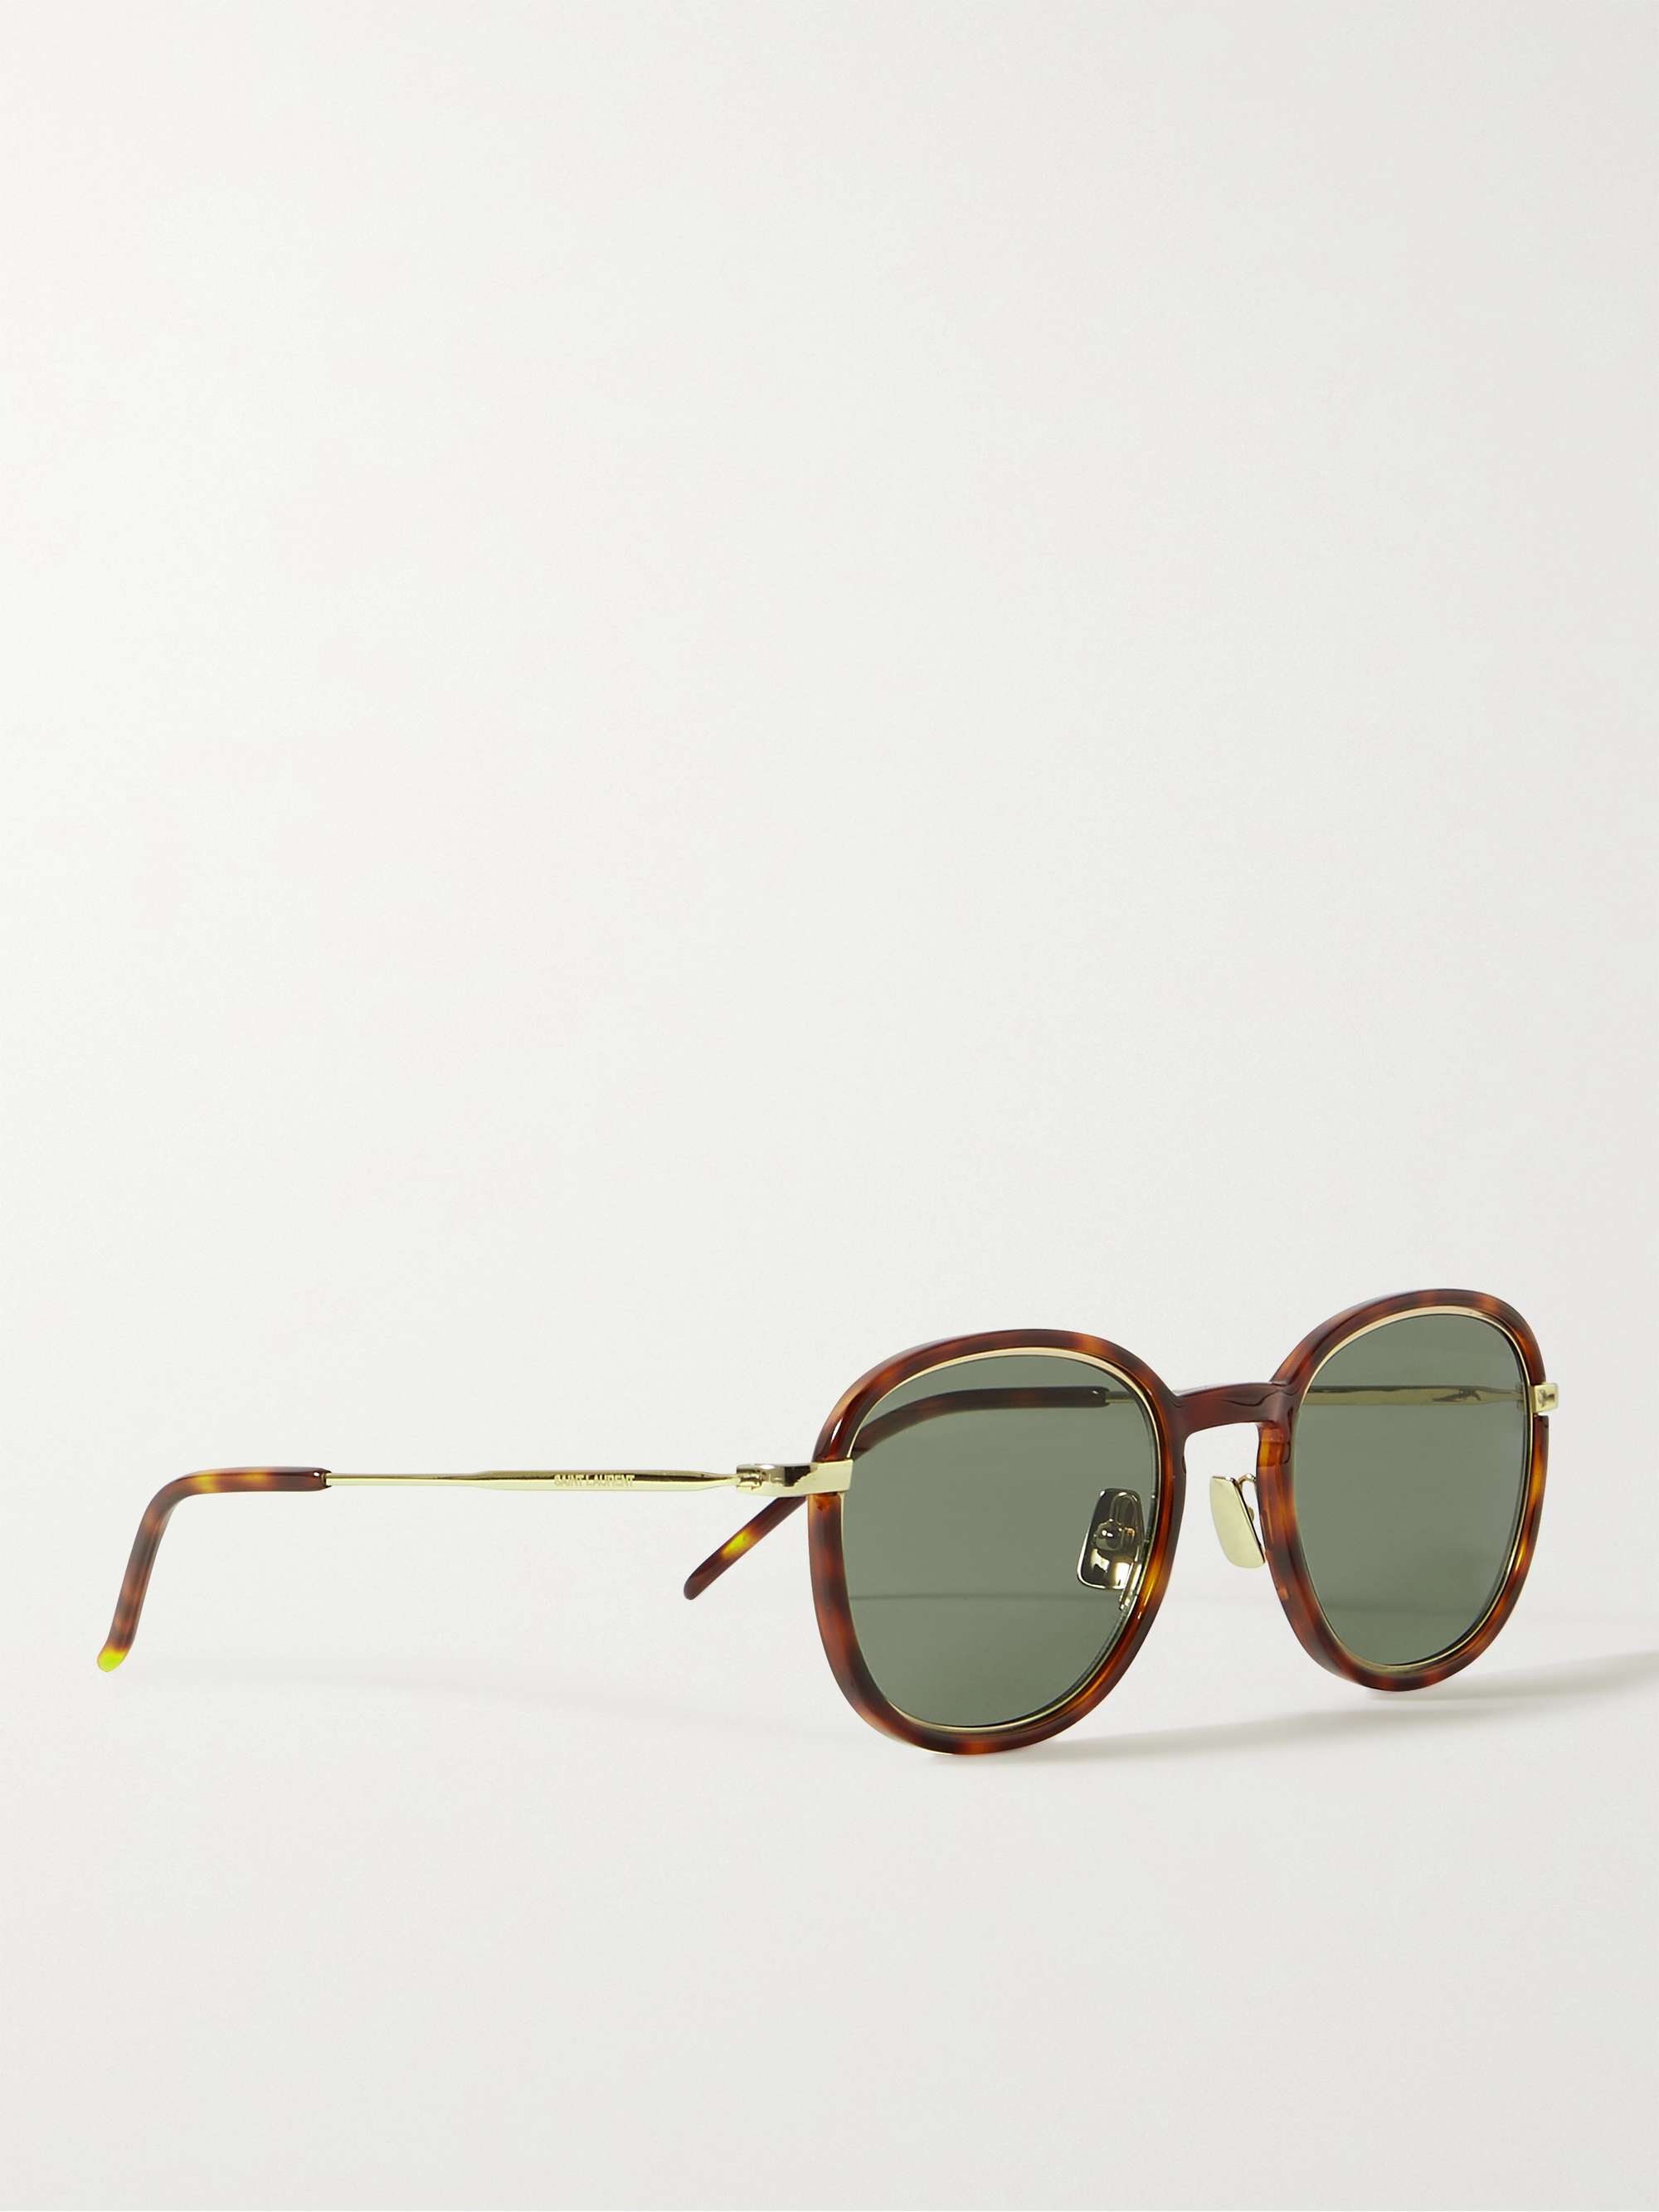 SAINT LAURENT EYEWEAR Round-Frame Tortoiseshell Acetate and Gold-Tone Sunglasses